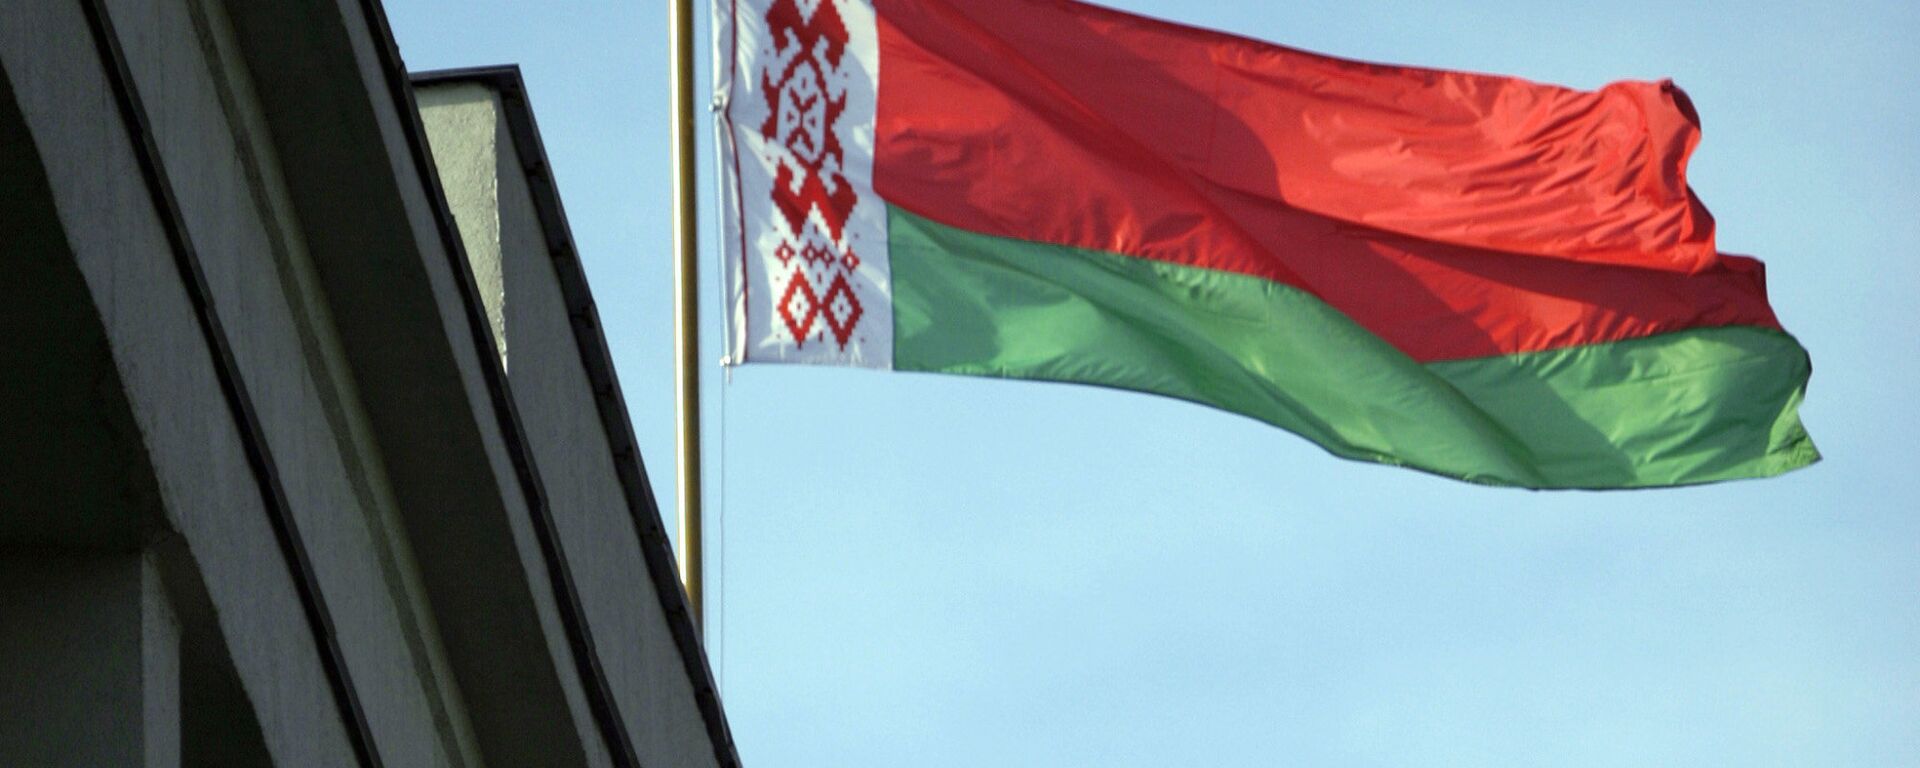 Bandera de Bielorrusia - Sputnik Mundo, 1920, 28.10.2021